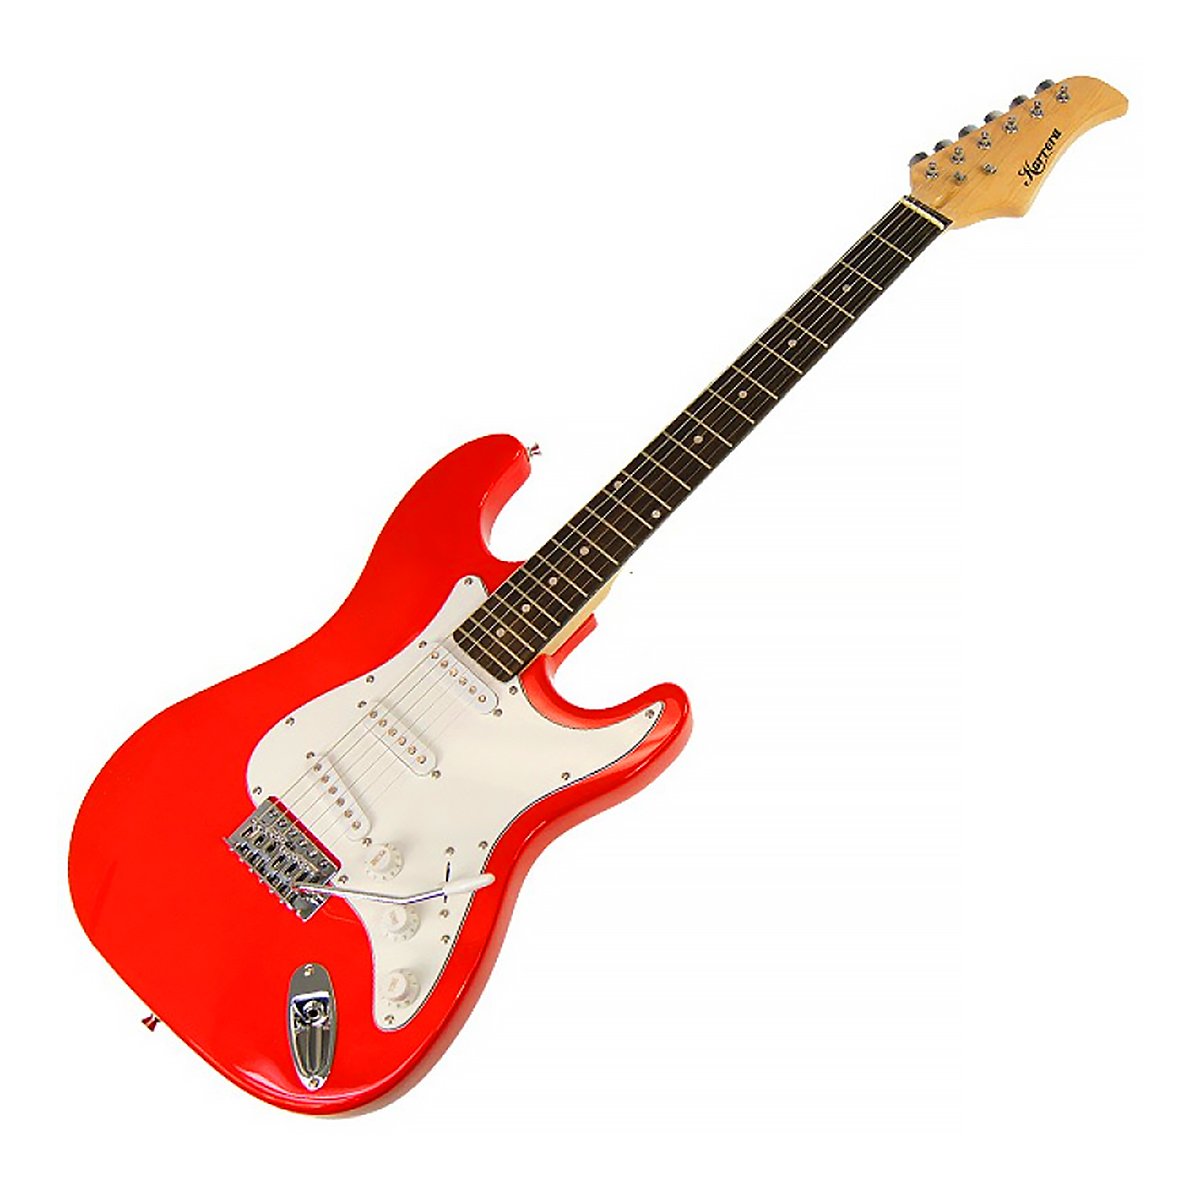 Karrera 39in Electric Guitar - Red 2